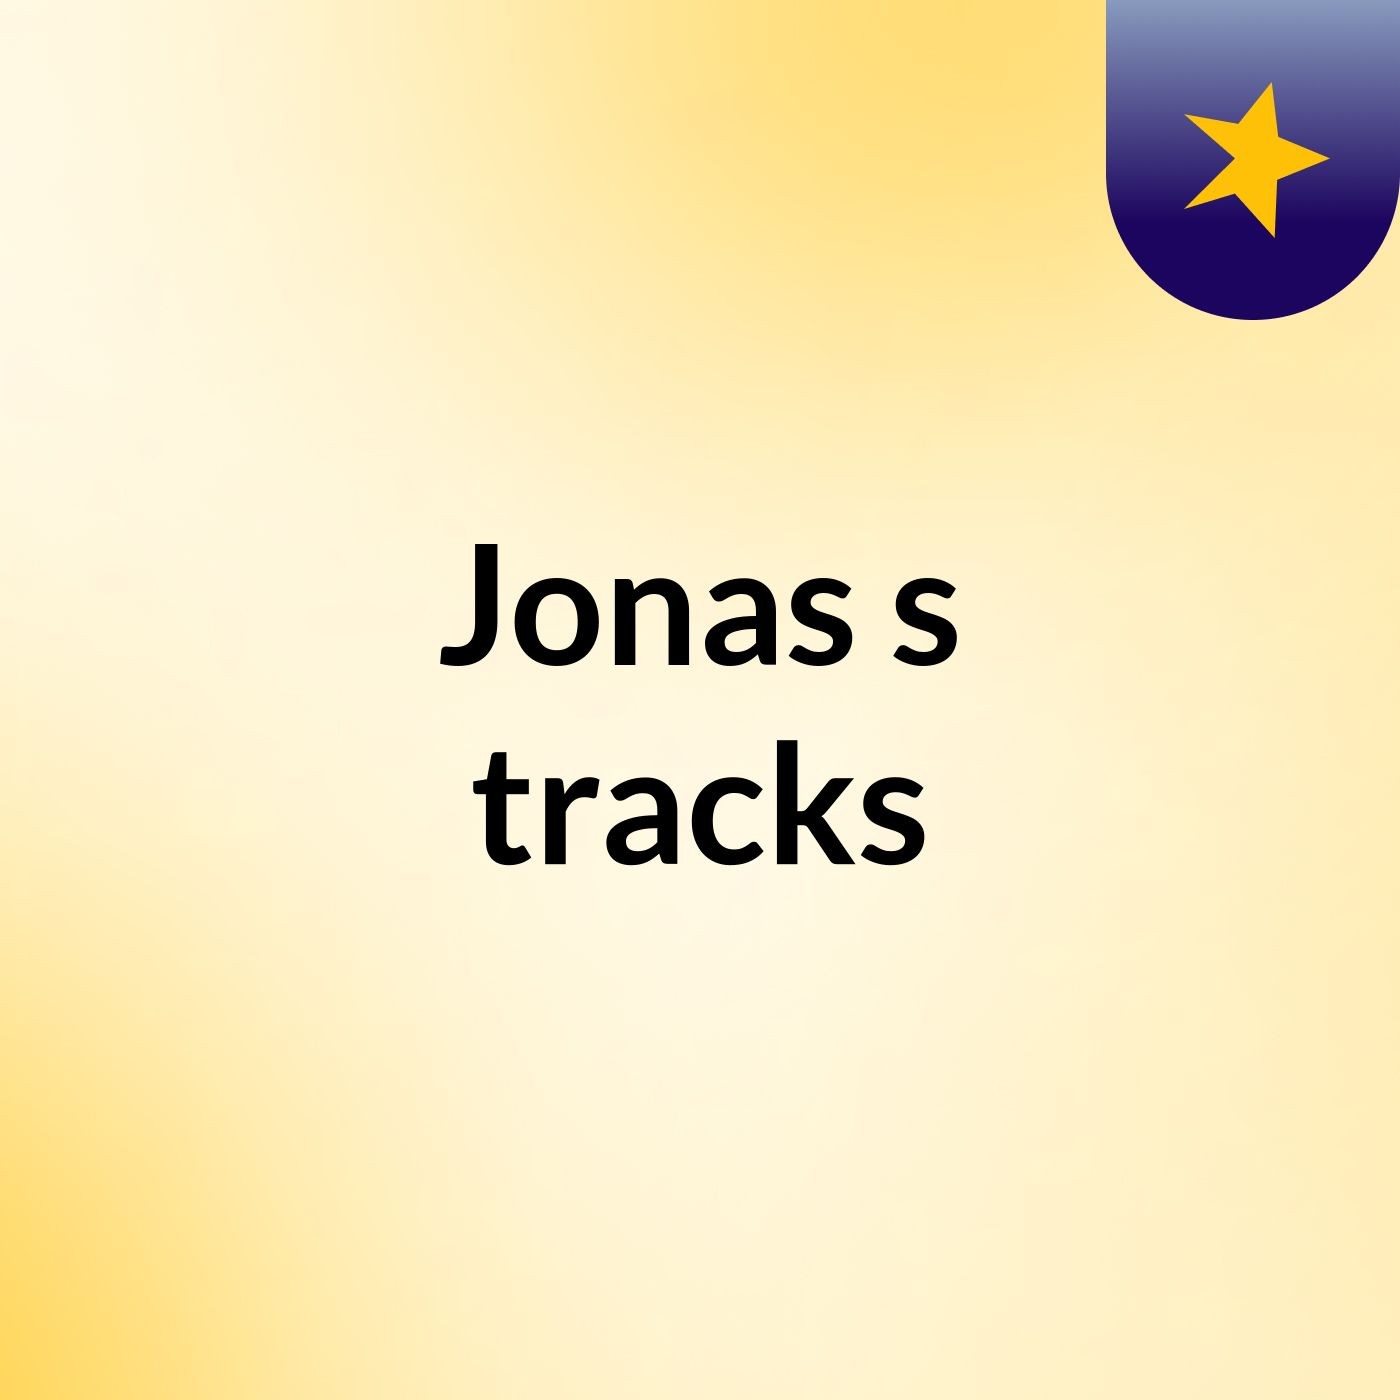 Jonas's tracks